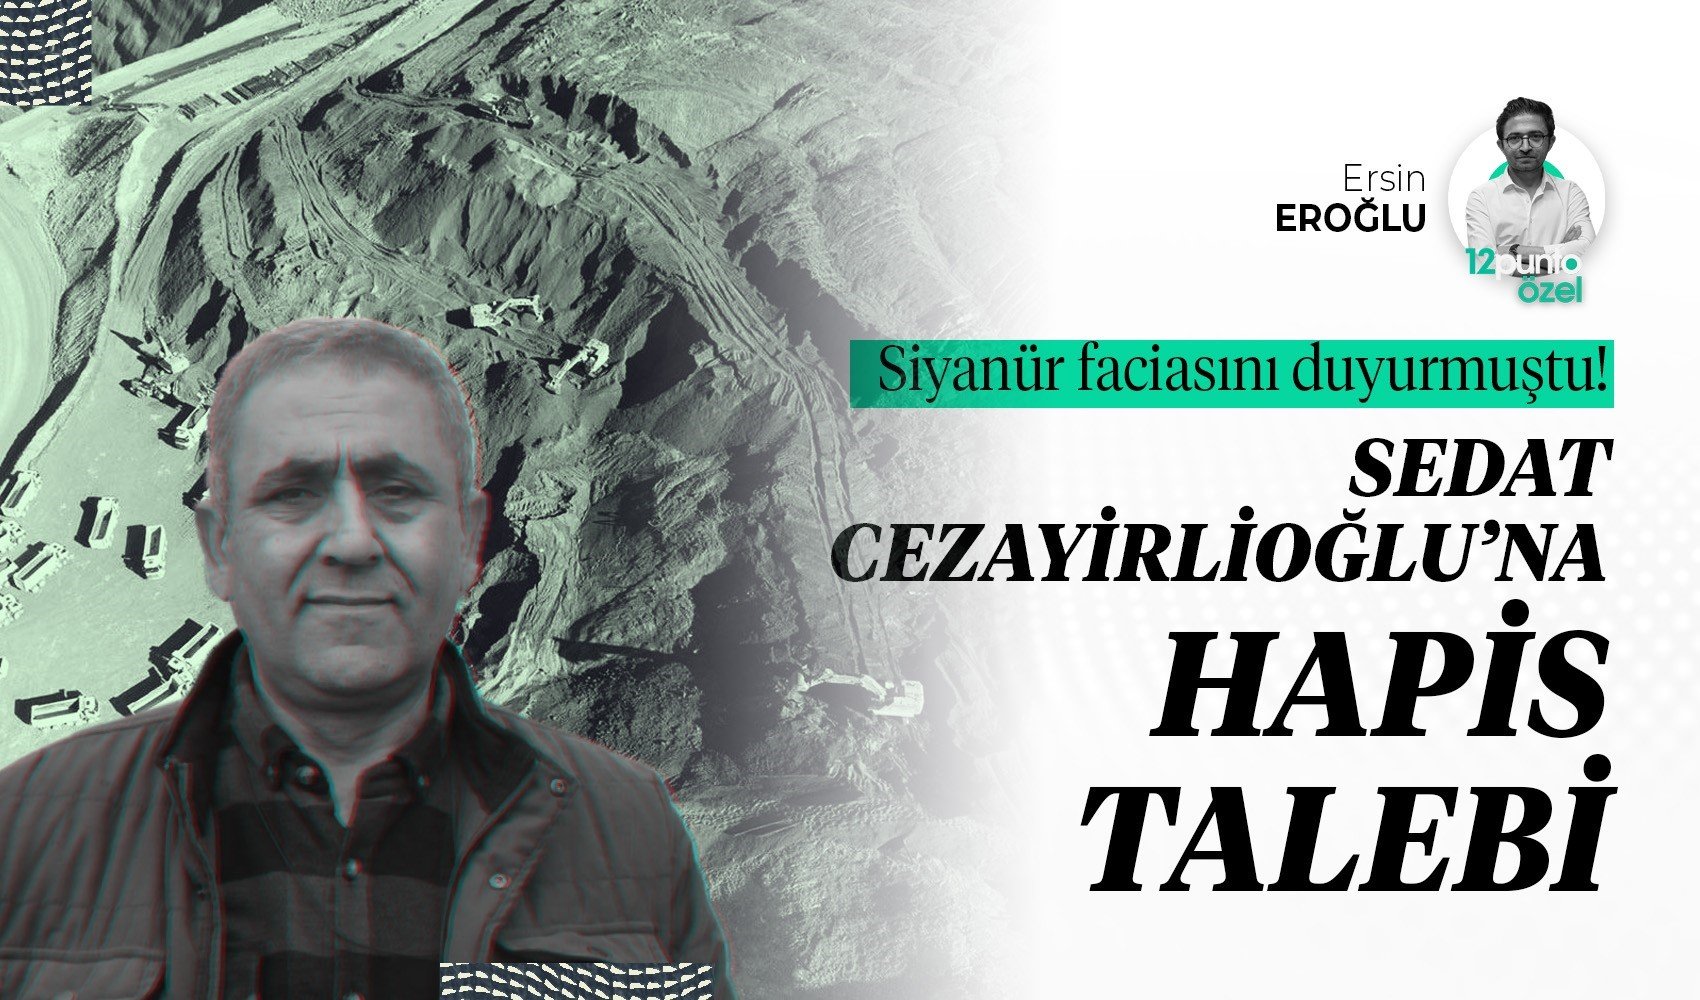 Sedat Cezayirlioğlu'na hapis talebi